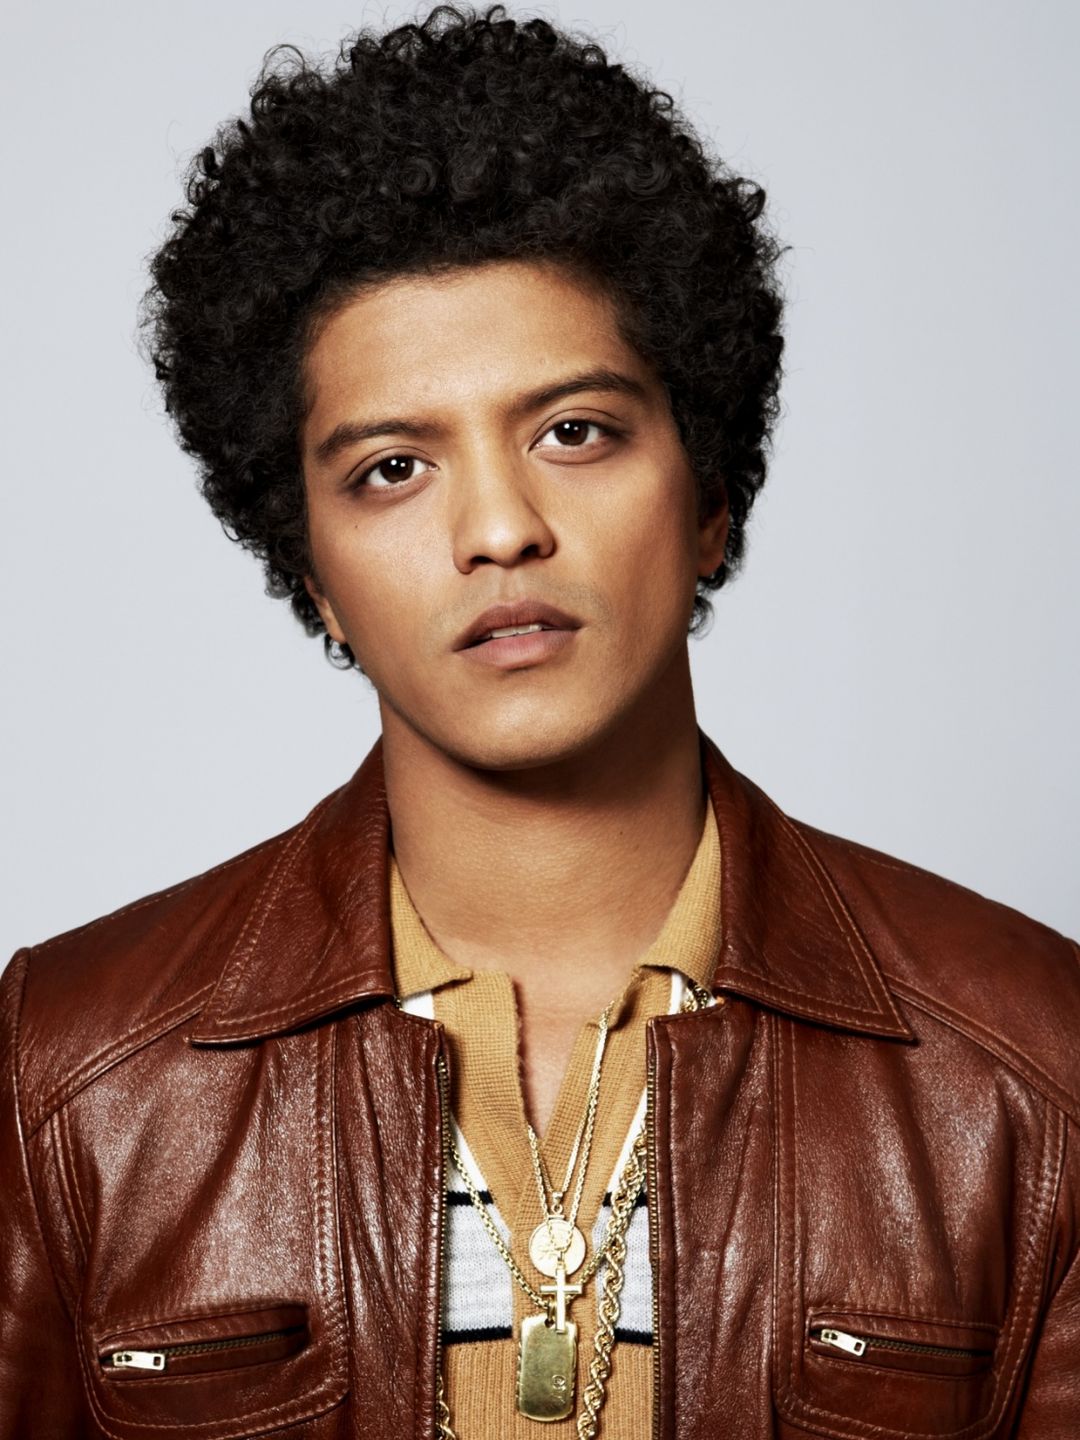 Bruno Mars current look